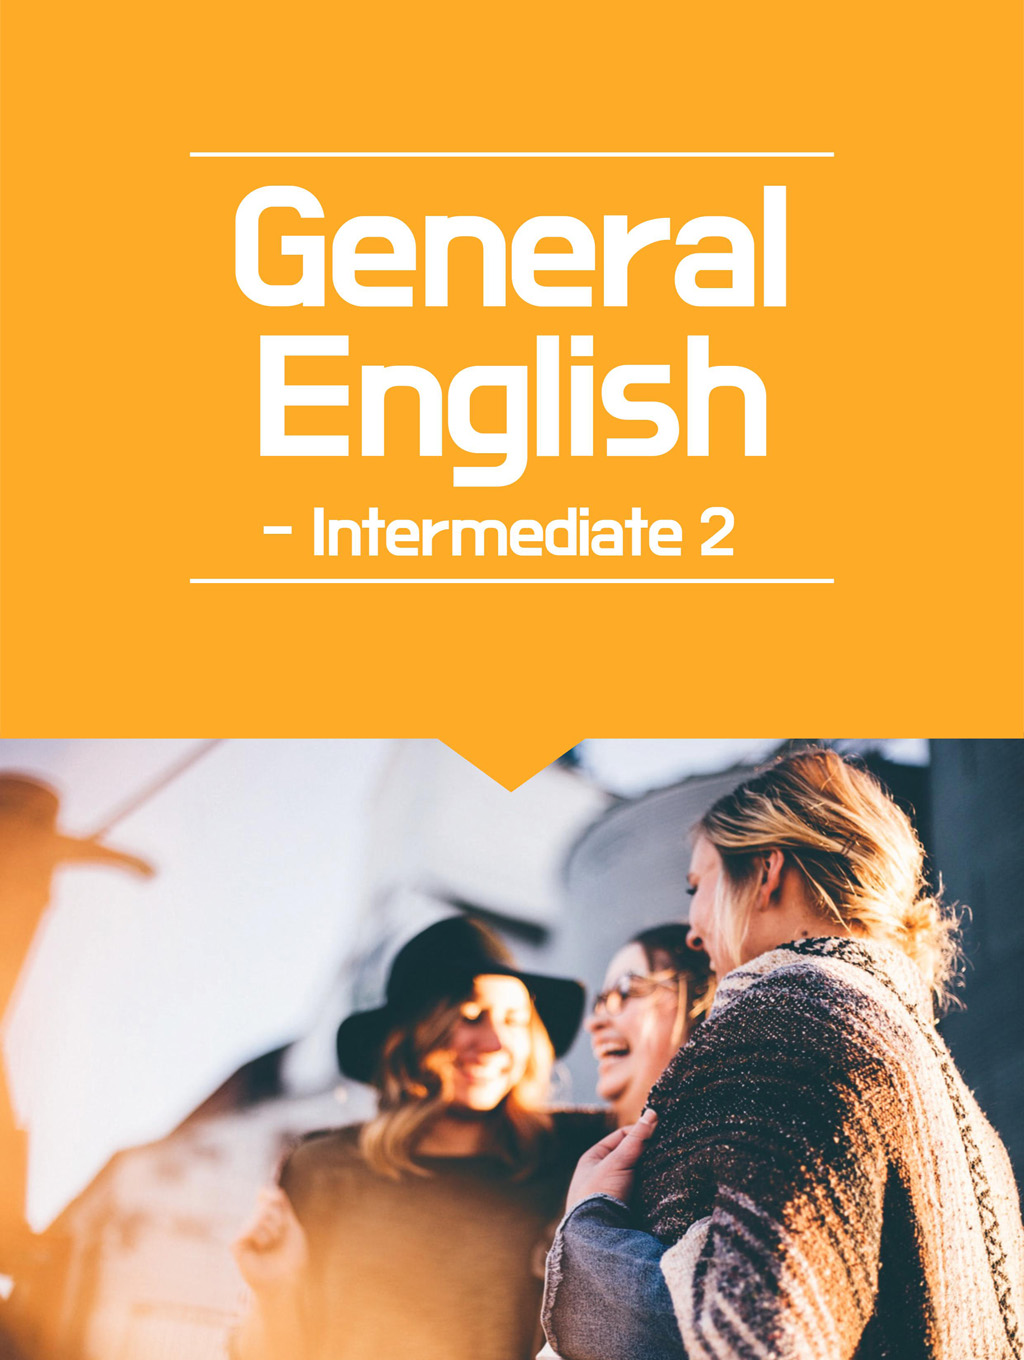 General English - Intermediate 2